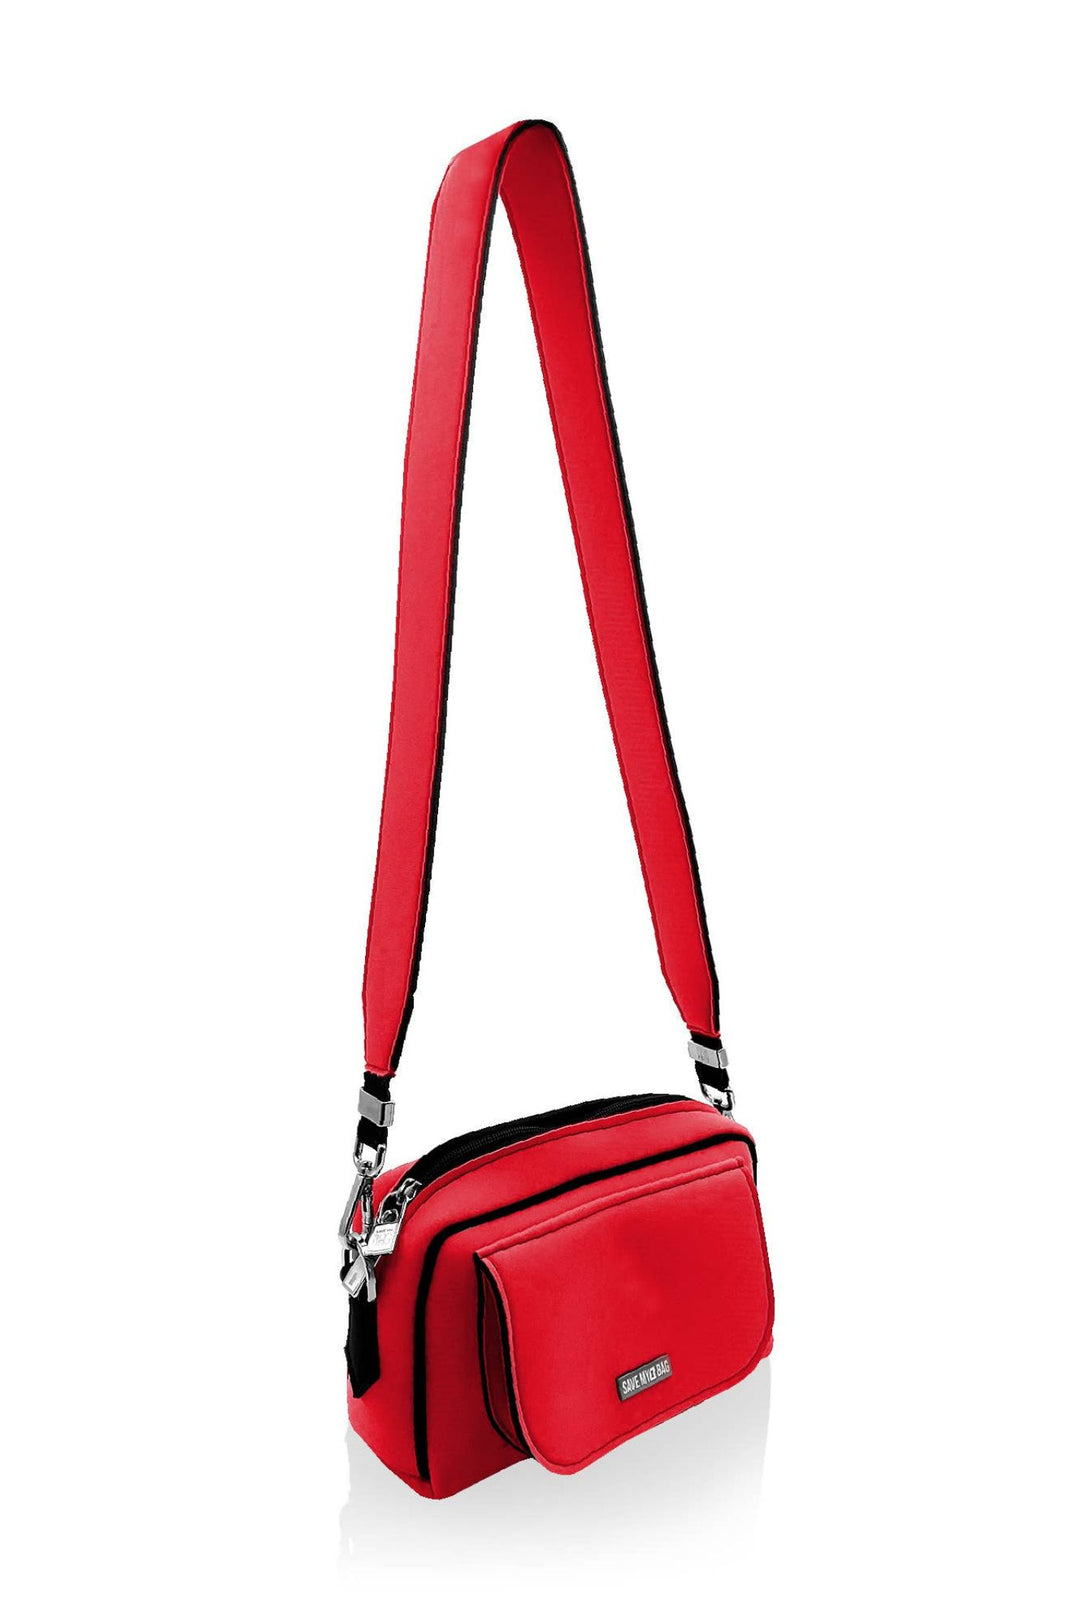 Save My Bag Kiss Red Washable Eco Neoprene Shoulder Bag